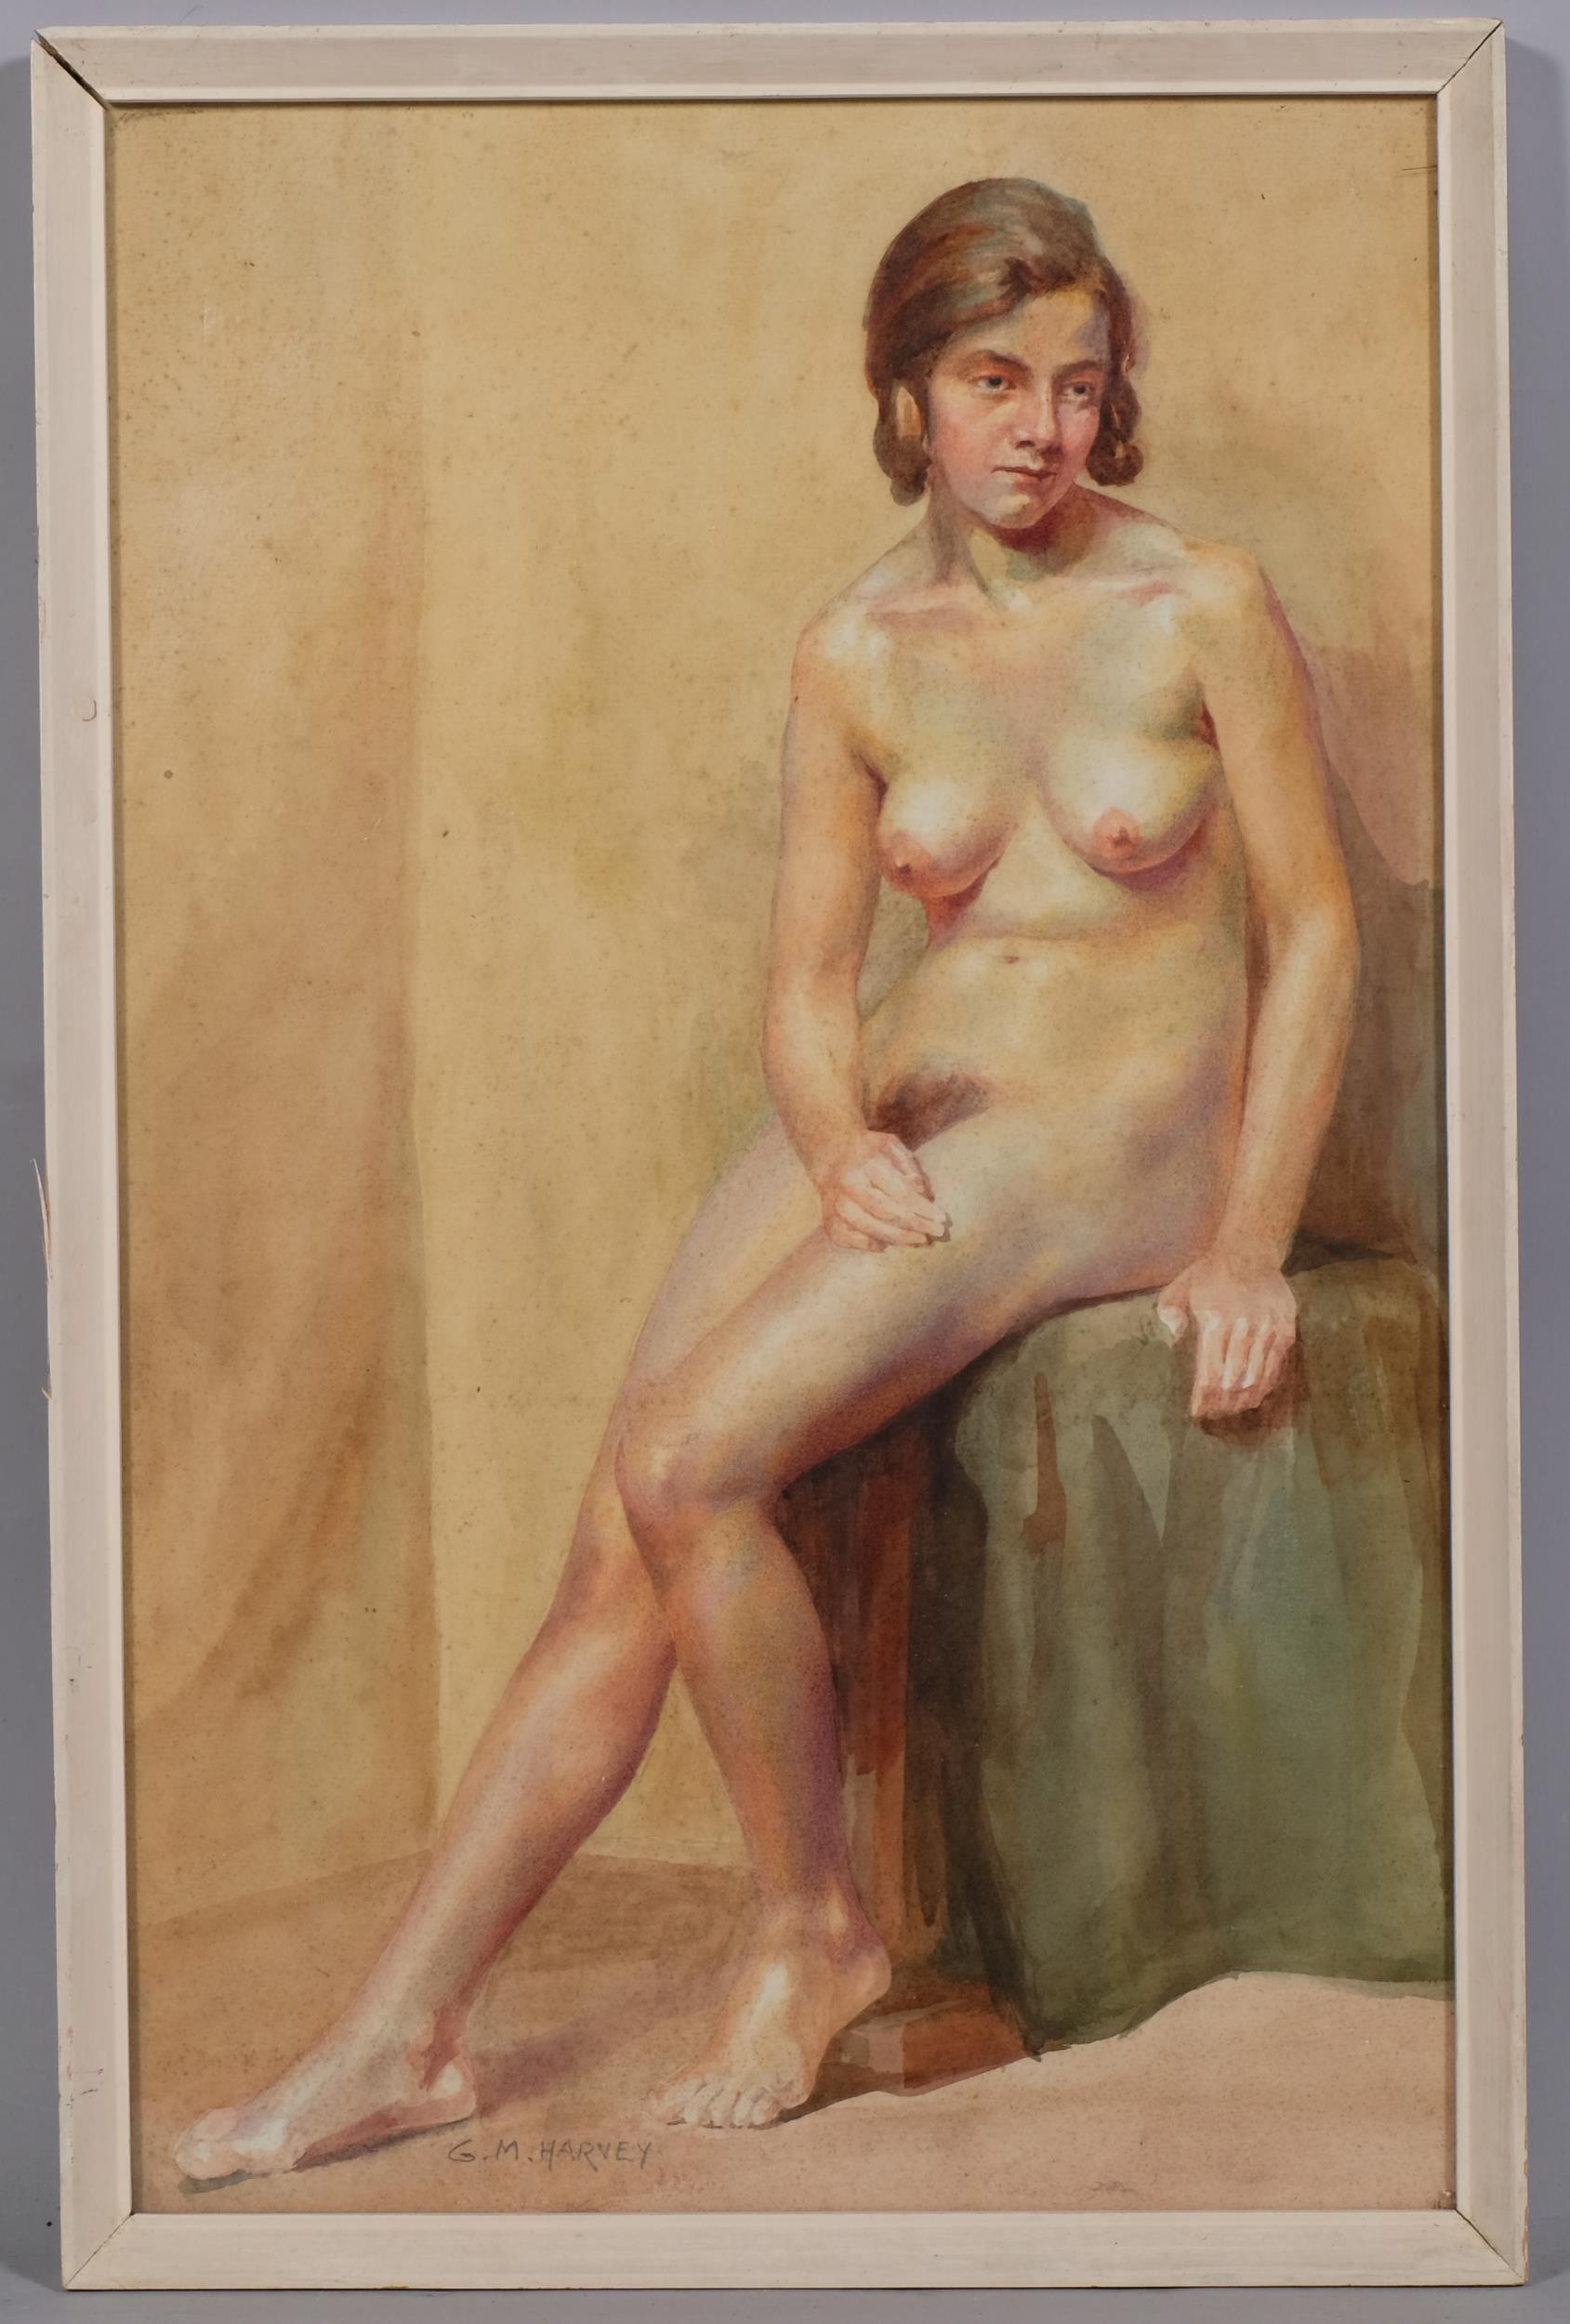 G M Harvey, nude life study, watercolour, signed, 46cm x 29cm, framed Light foxing